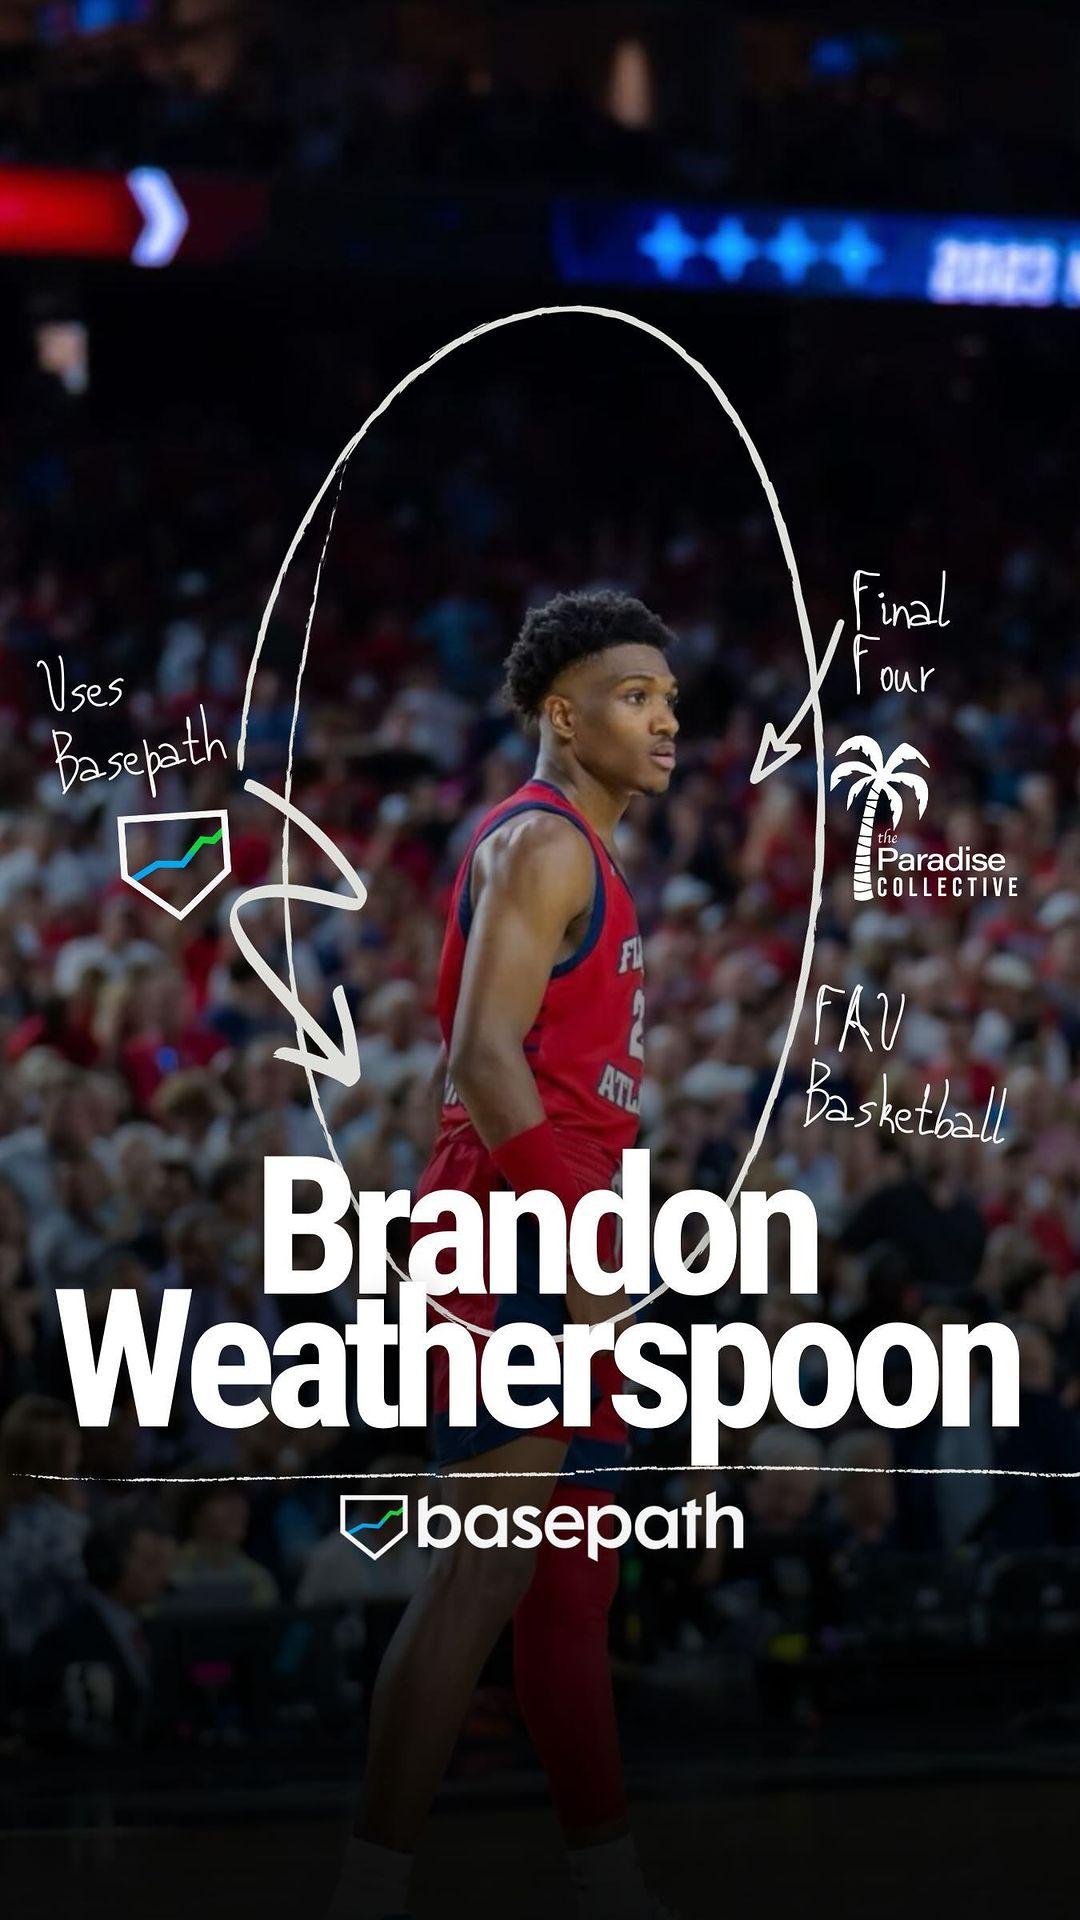 Brandon Weatherspoon Instagram Post Influencer Campaign